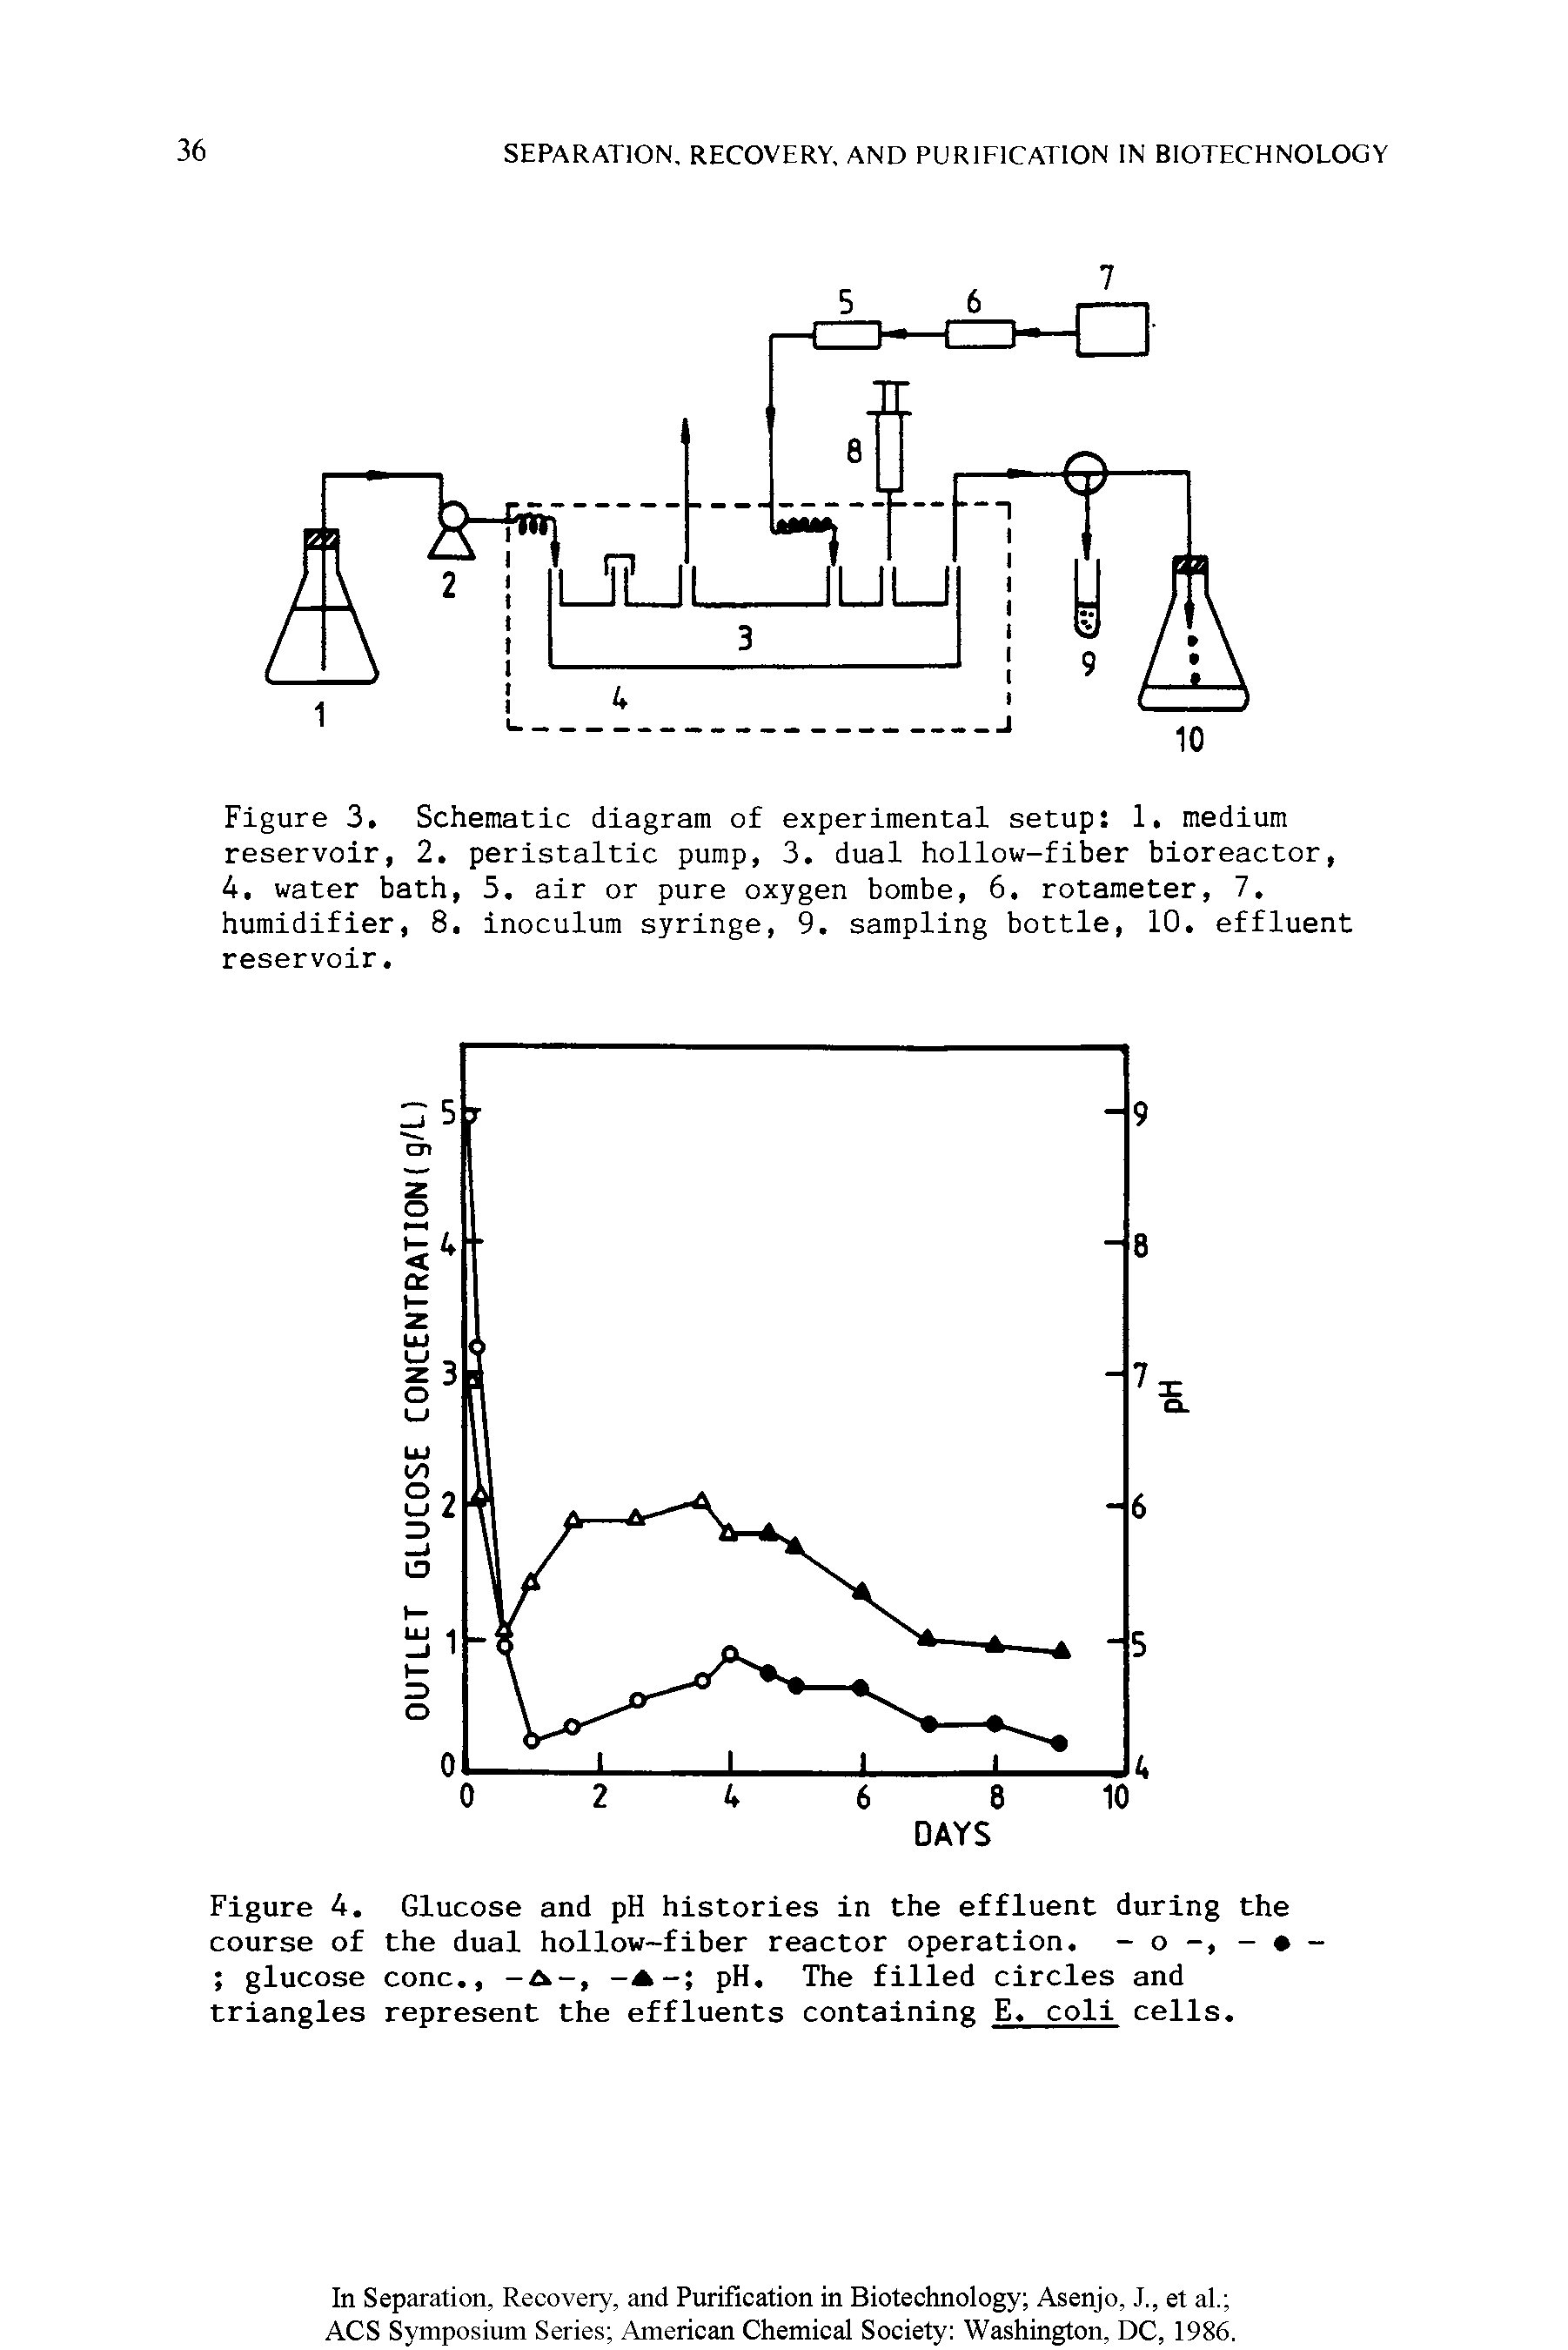 Figure 3. Schematic diagram of experimental setup 1. medium reservoir, 2. peristaltic pump, 3. dual hollow-fiber bioreactor, 4. water bath, 5. air or pure oxygen bombe, 6. rotameter, 7. humidifier, 8. inoculum syringe, 9. sampling bottle, 10. effluent reservoir.